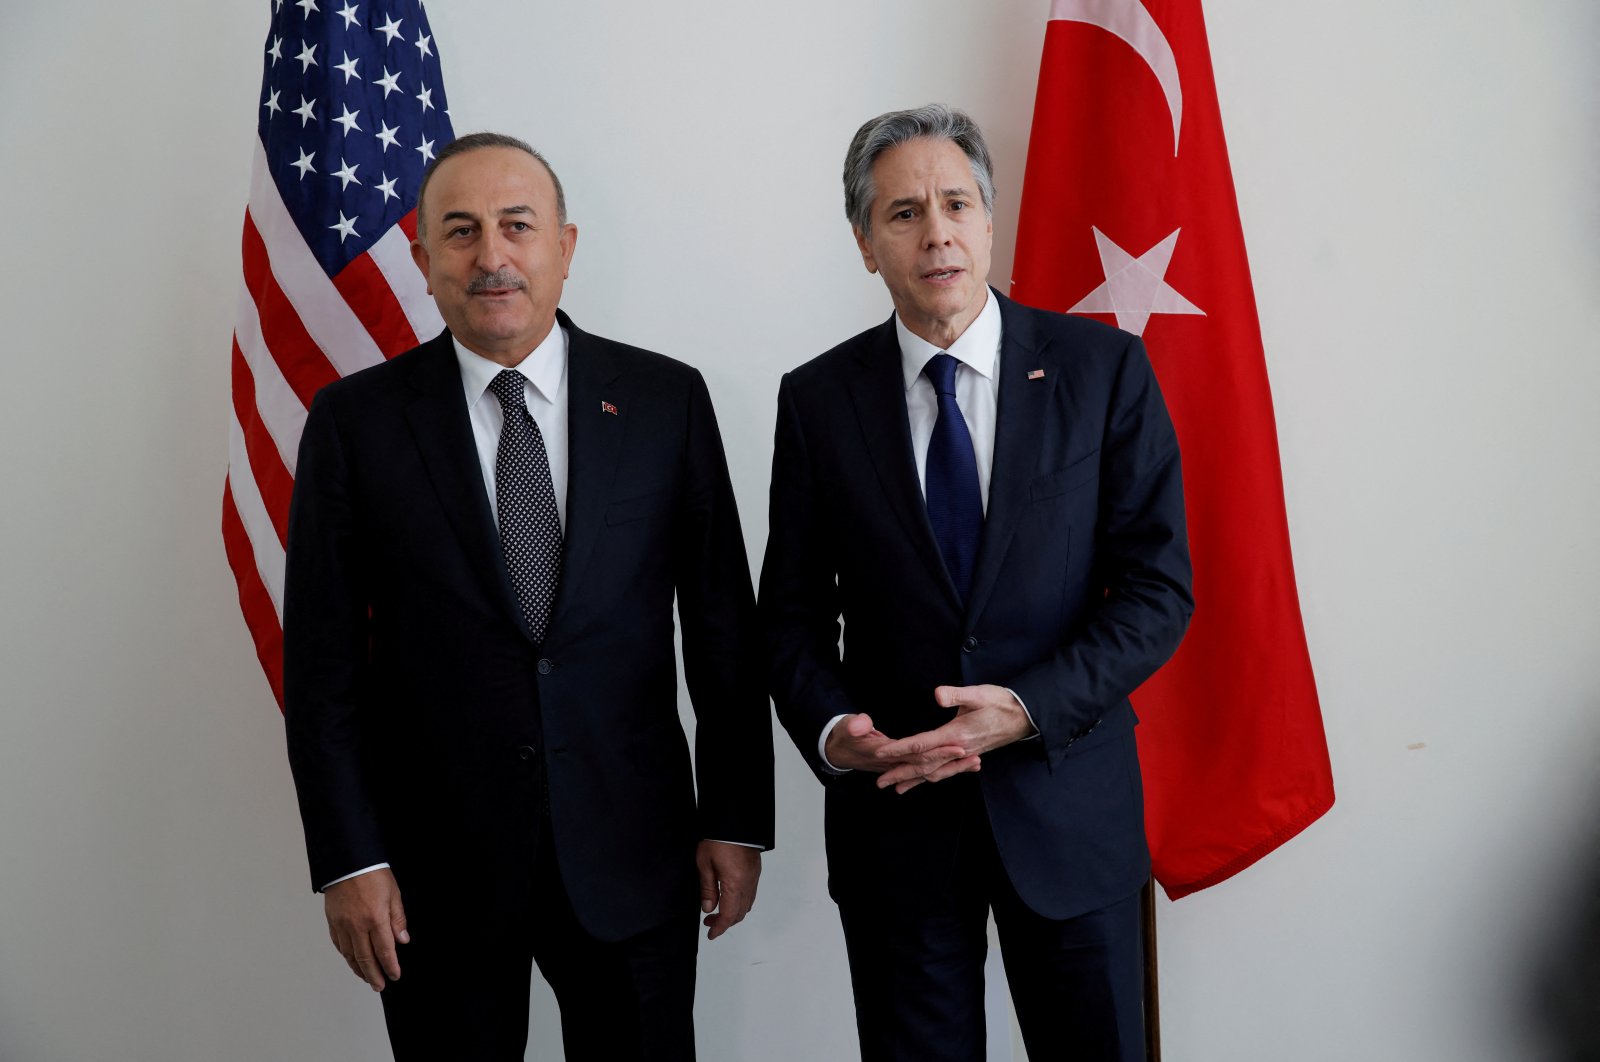 Turkish Foreign Minister Mevlüt Çavuşoğlu and U.S. Secretary of State Antony Blinken meet at United Nations headquarters in New York, U.S., May 18, 2022. (Reuters Photo)